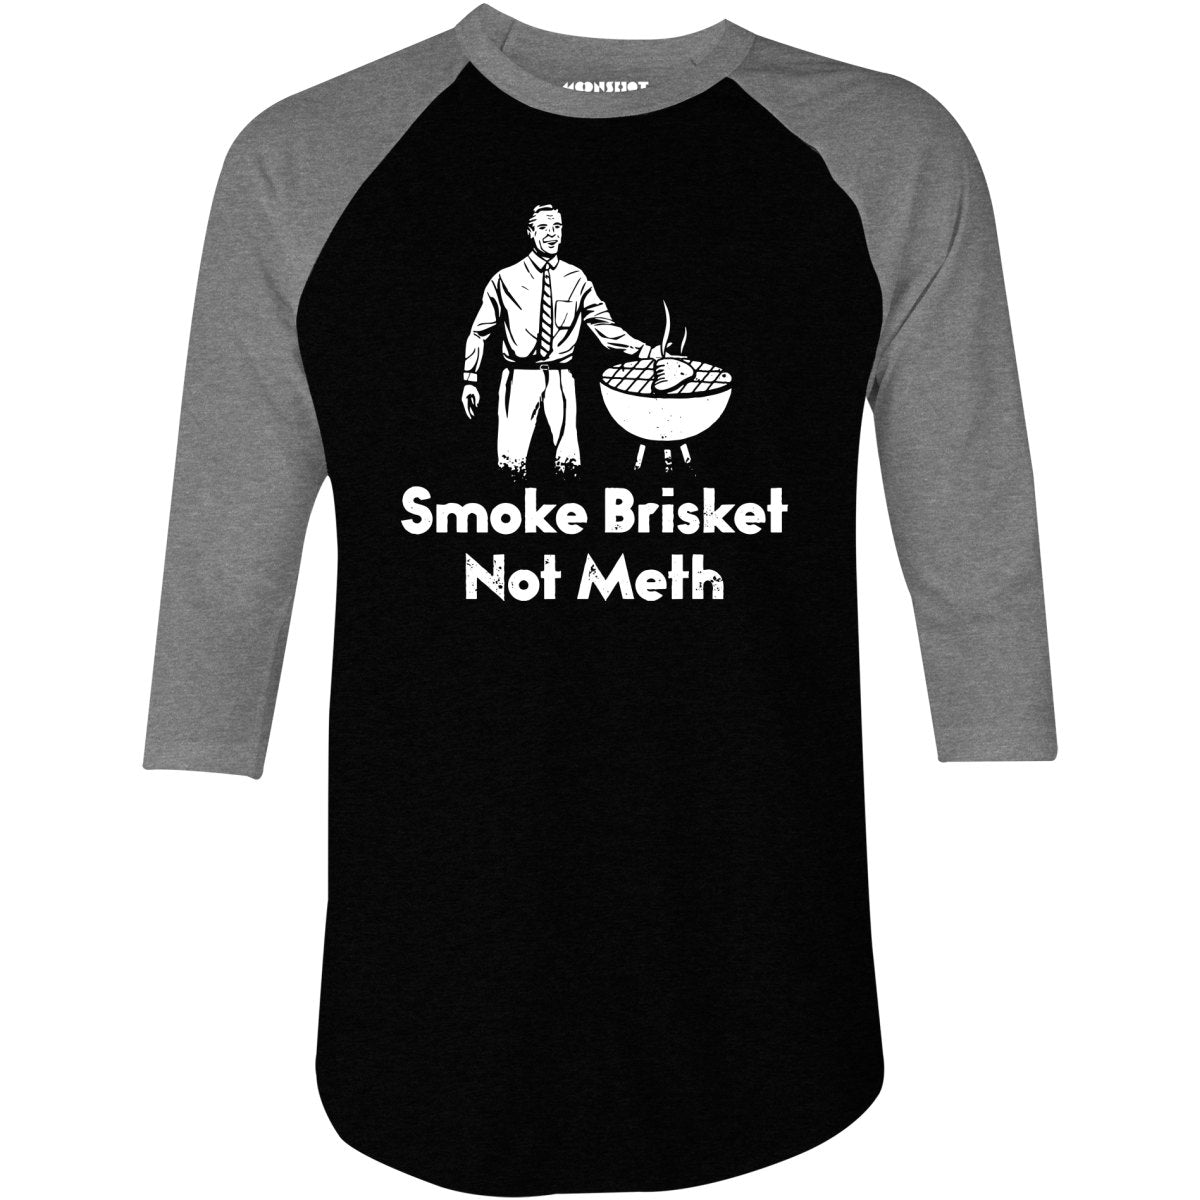 Smoke Brisket Not Meth v2 - 3/4 Sleeve Raglan T-Shirt